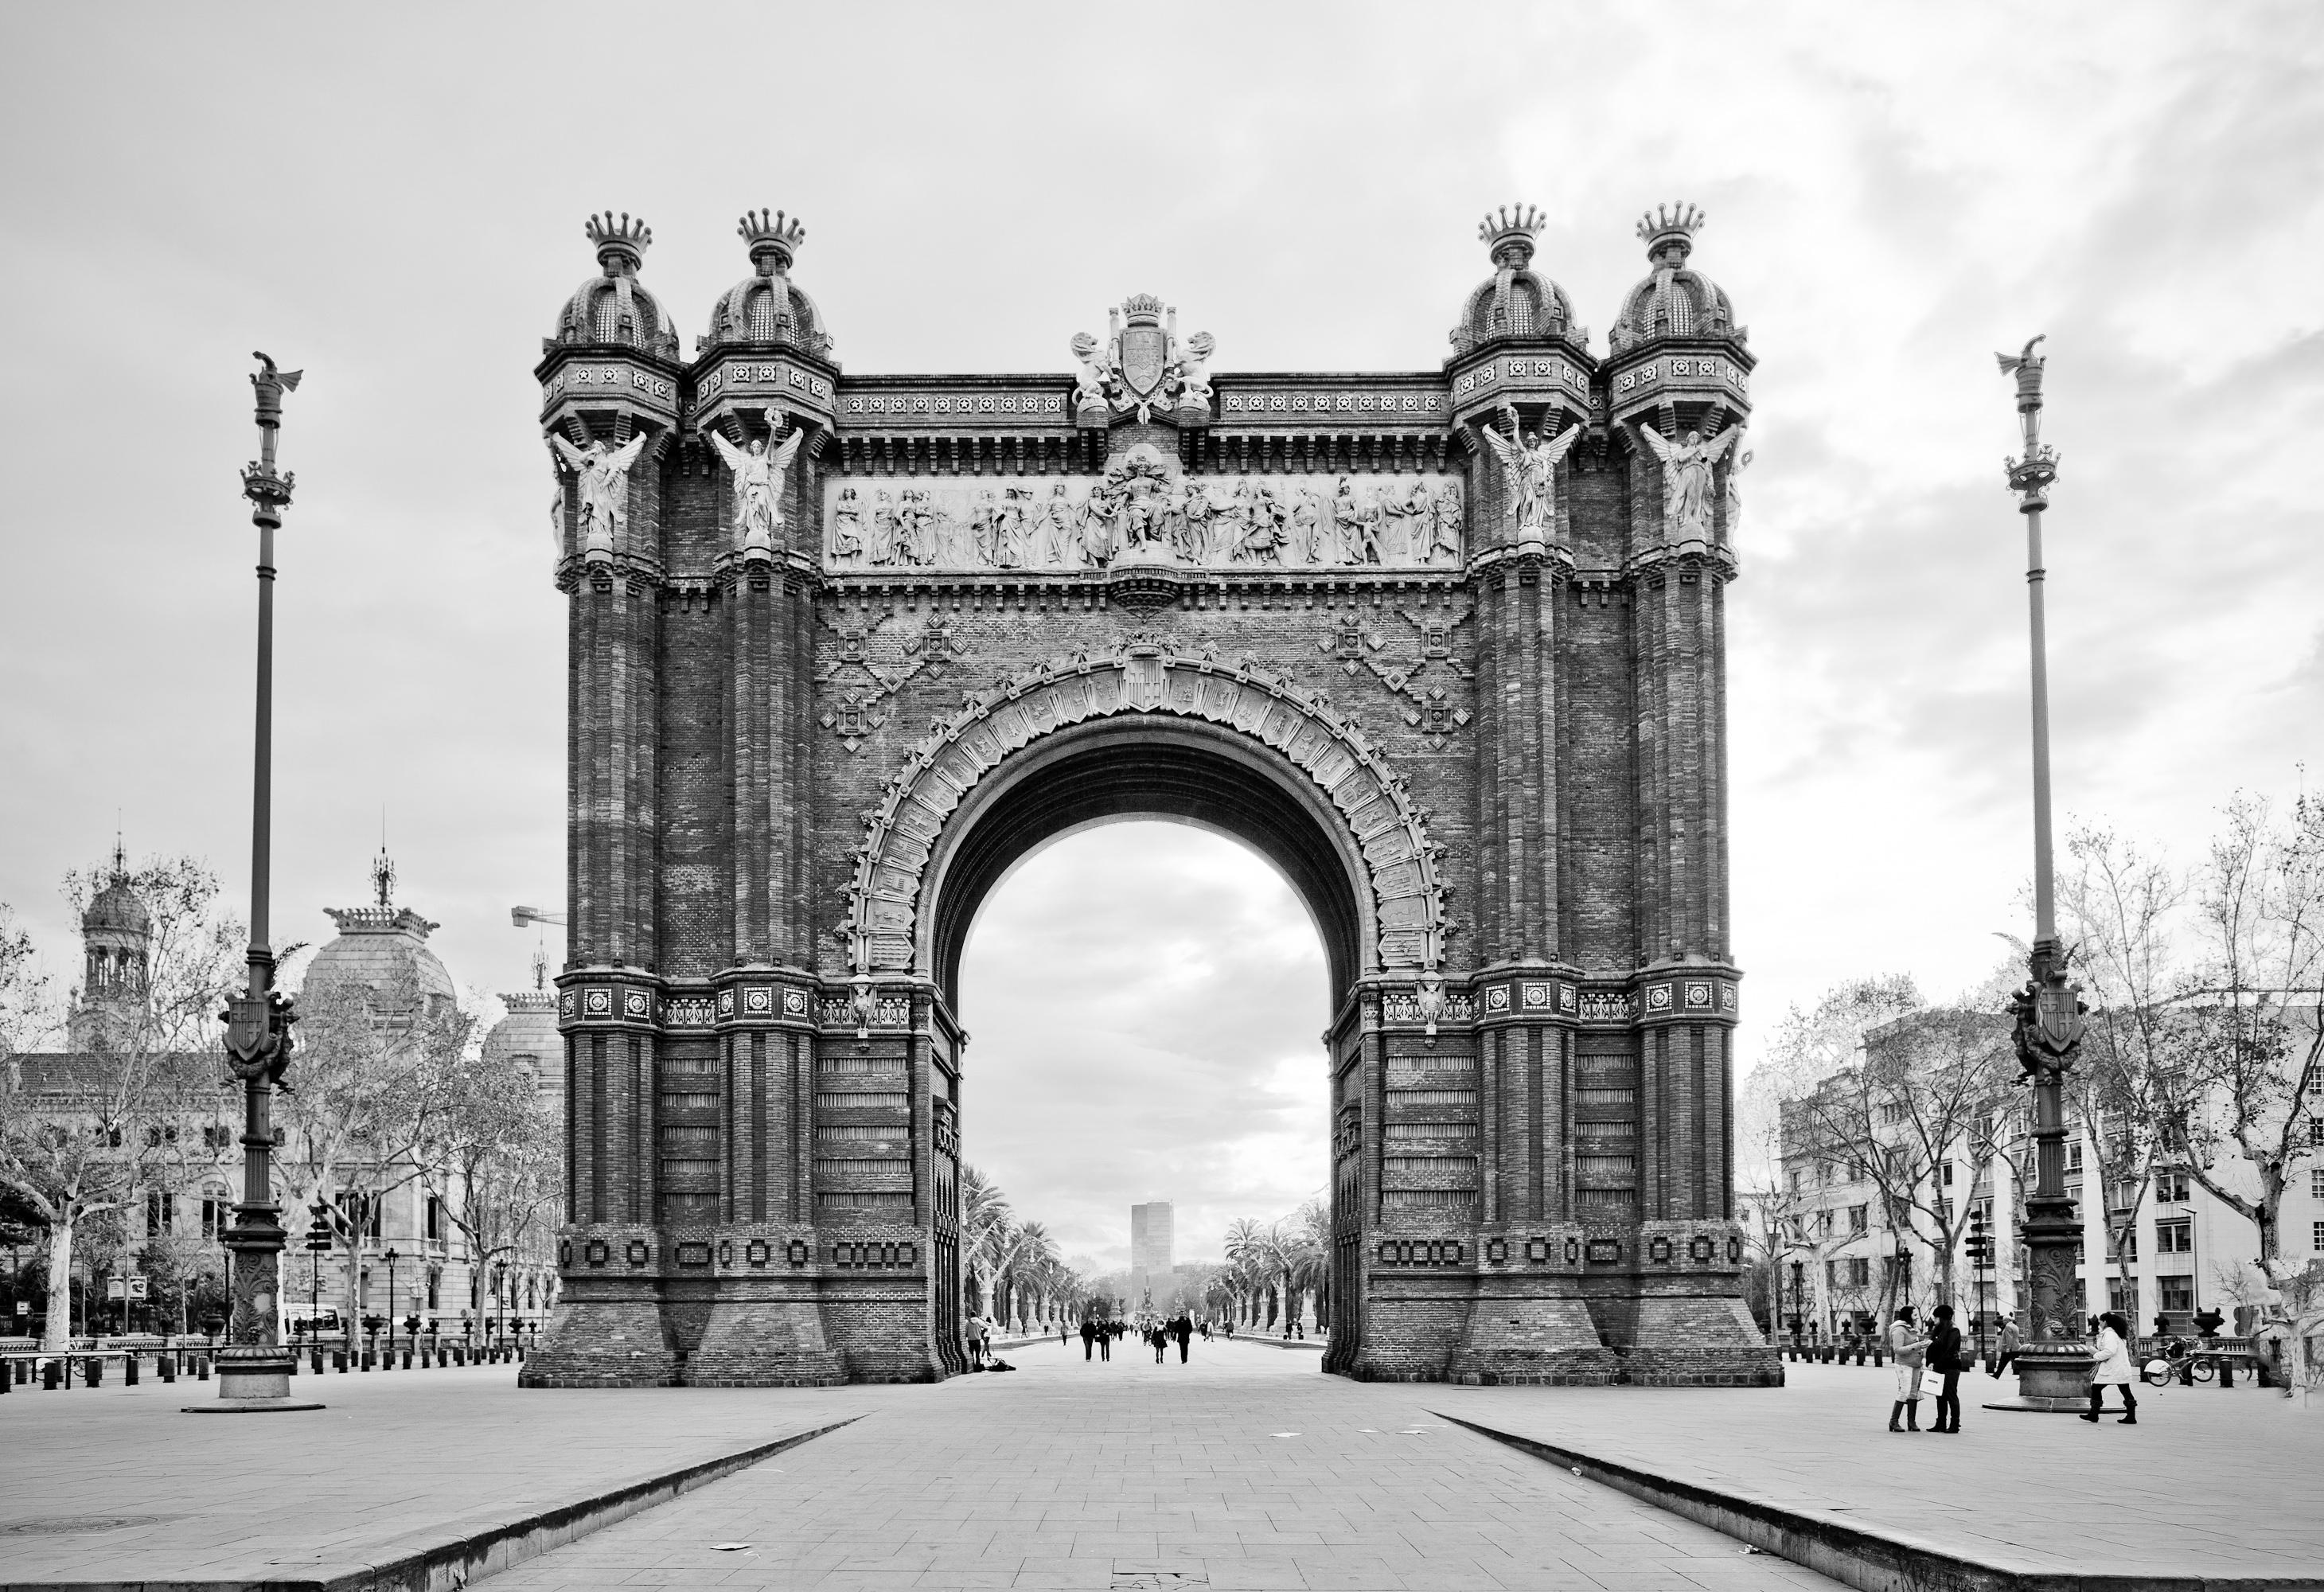 Arc de Triomf (Barcelona) - 21st Century, Landscape Photography, Black & White